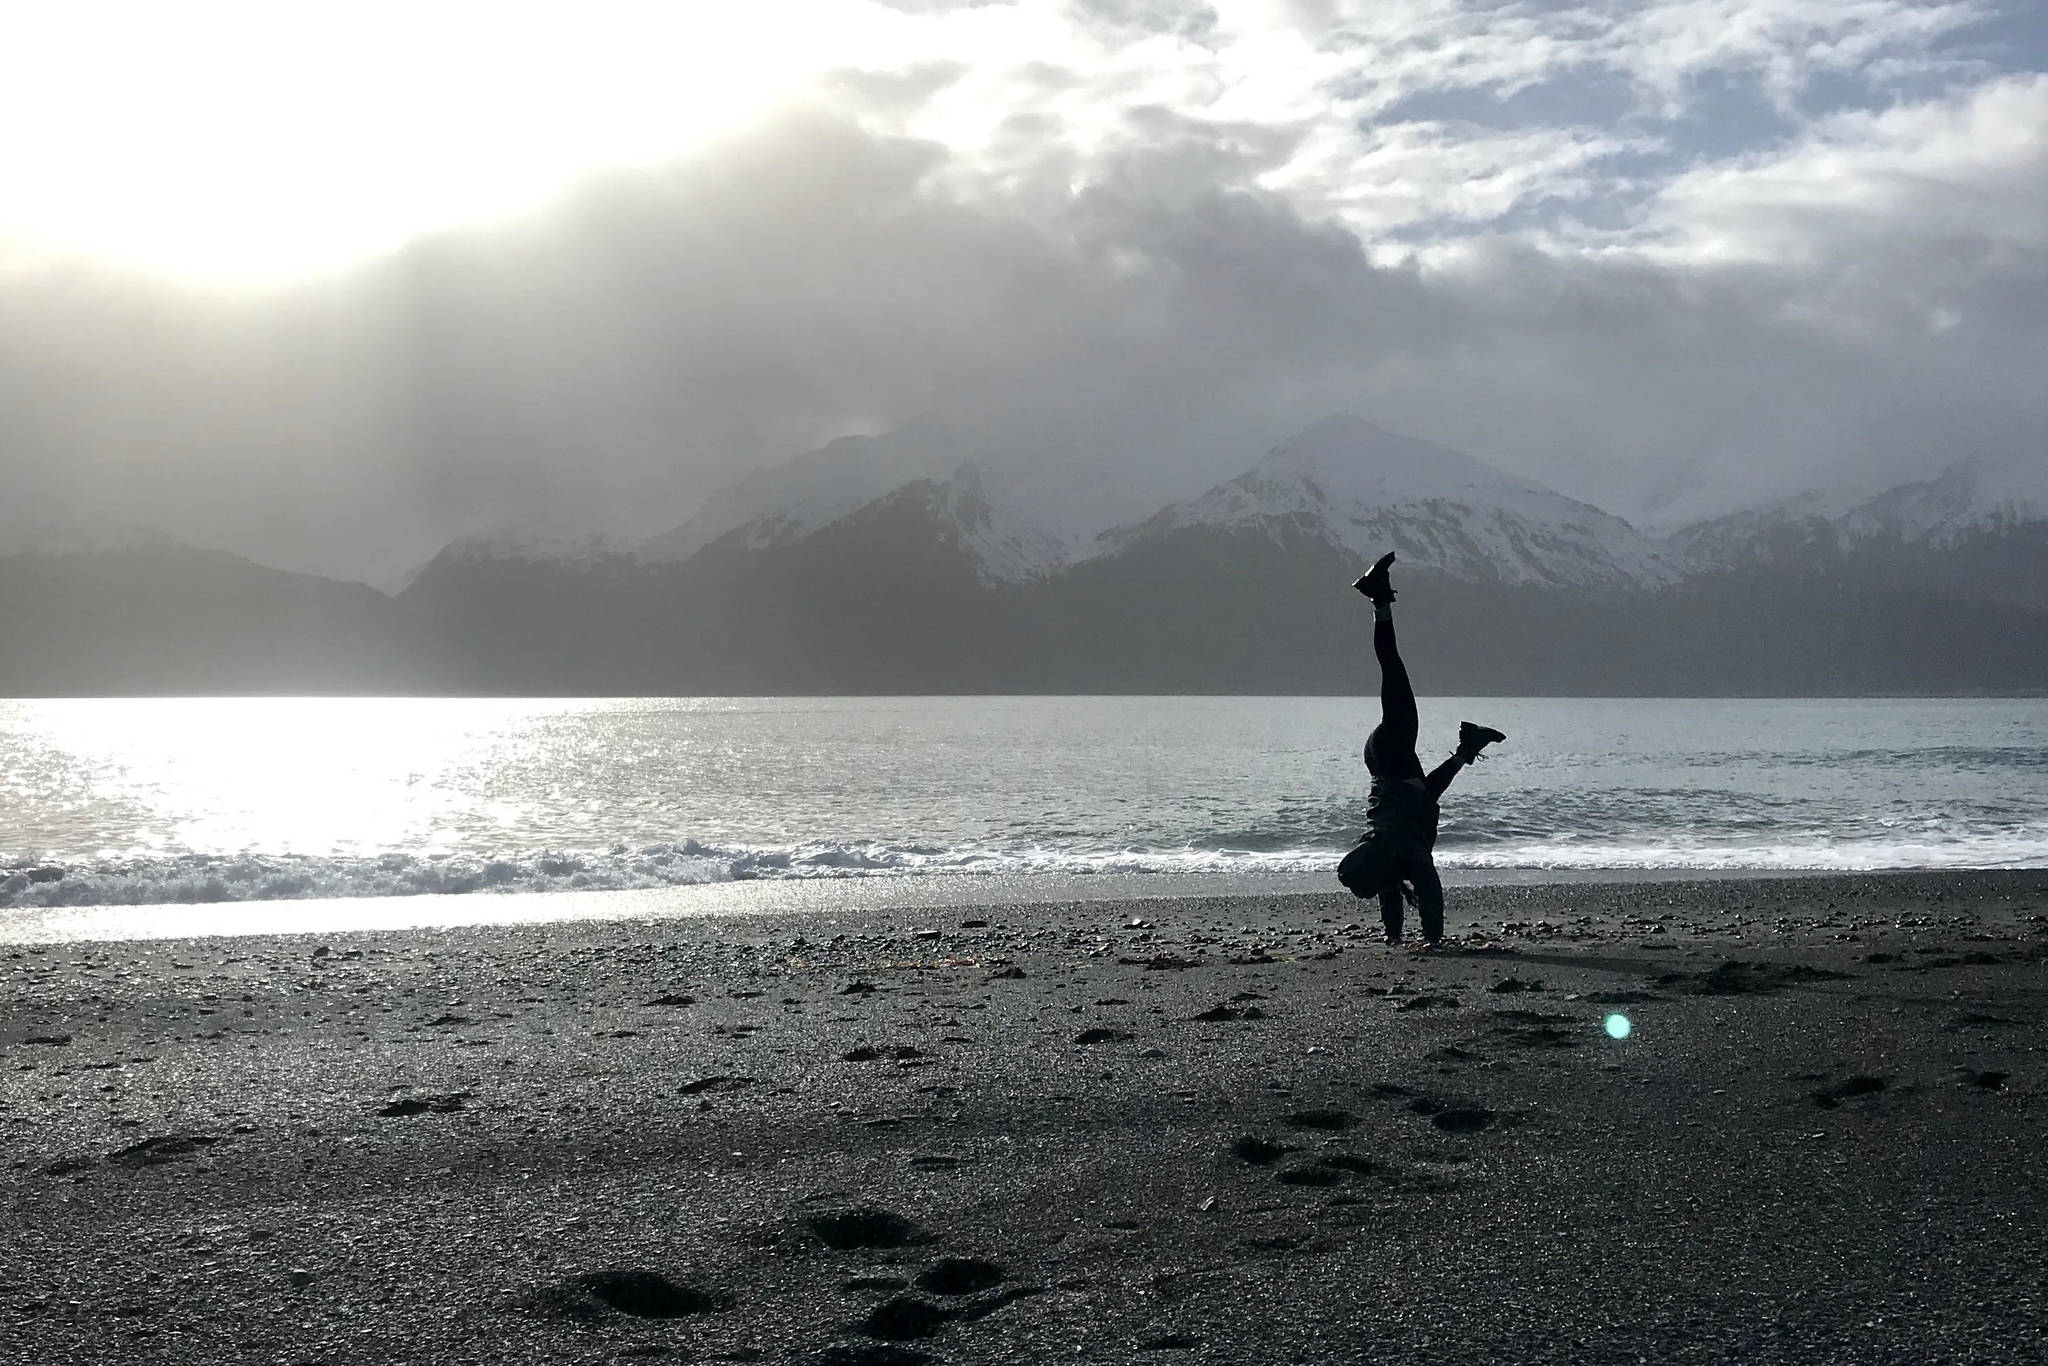 Nikki Aufiero practices a handstand at Fourth of July Beach near Seward, Alaska, in April 2019. (Photo by Kat Sorensen/Peninsula Clarion)